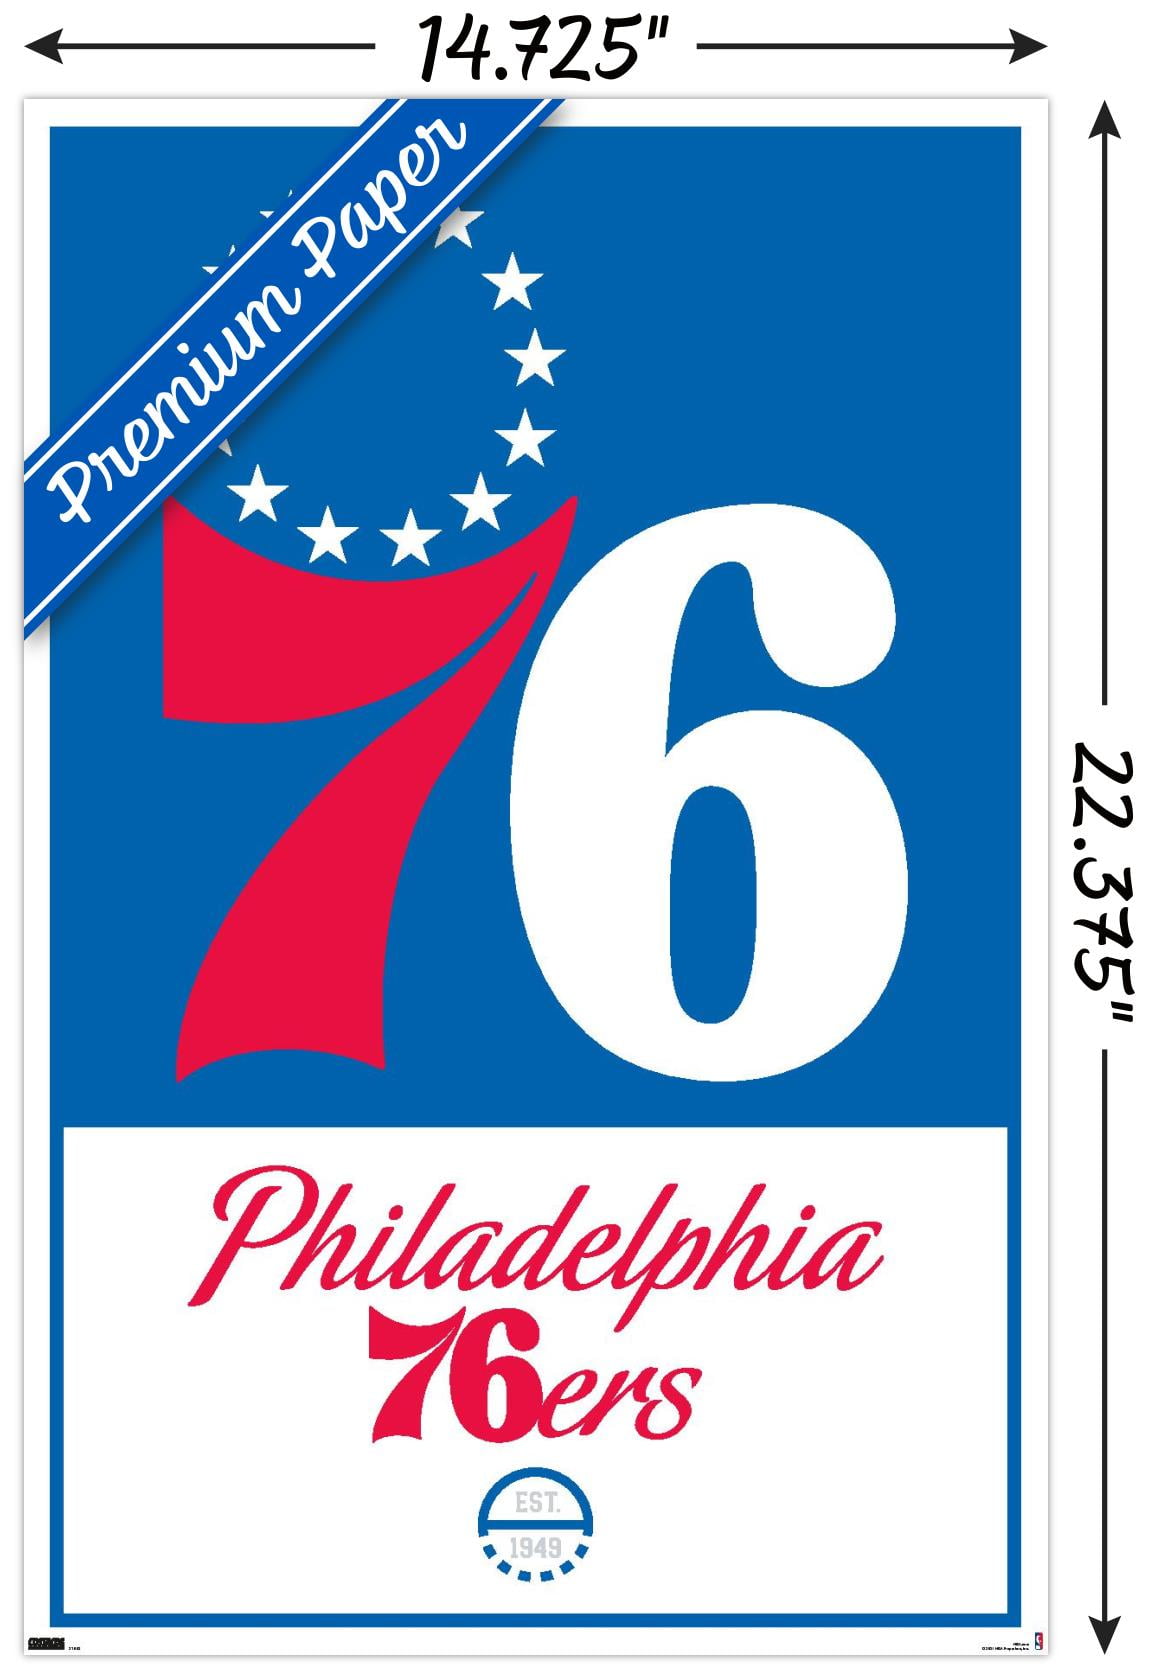 Sixers Mobile Wallpaper Downloads | Philadelphia 76ers